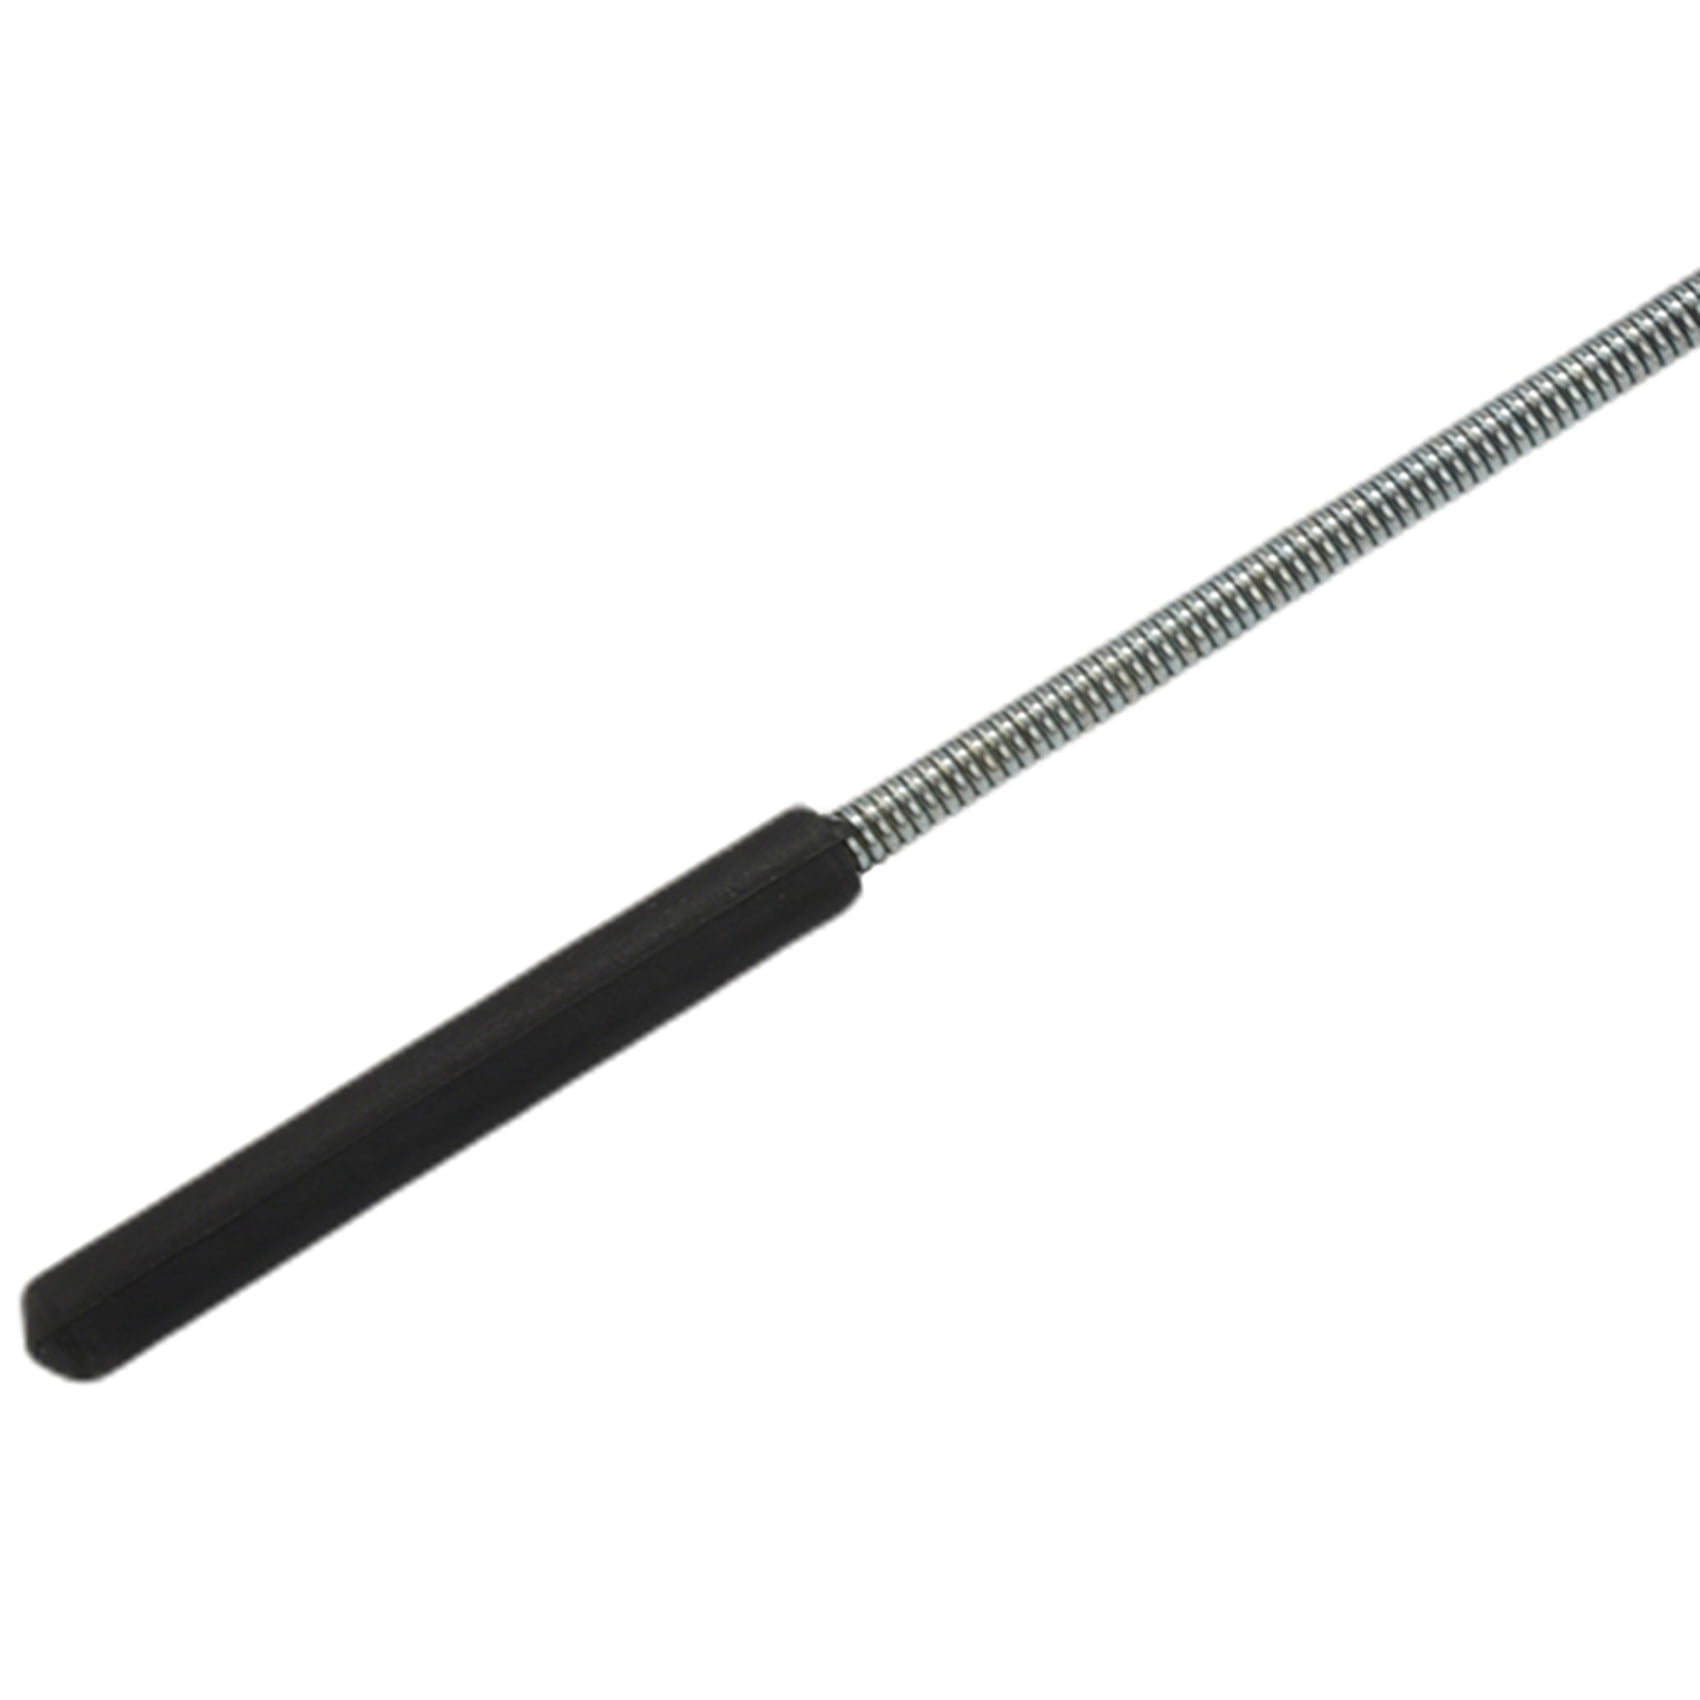 N4H5 Auto Repair Flexible Slender Metal Magnet Pick up Tool Black+Silver L9S8 